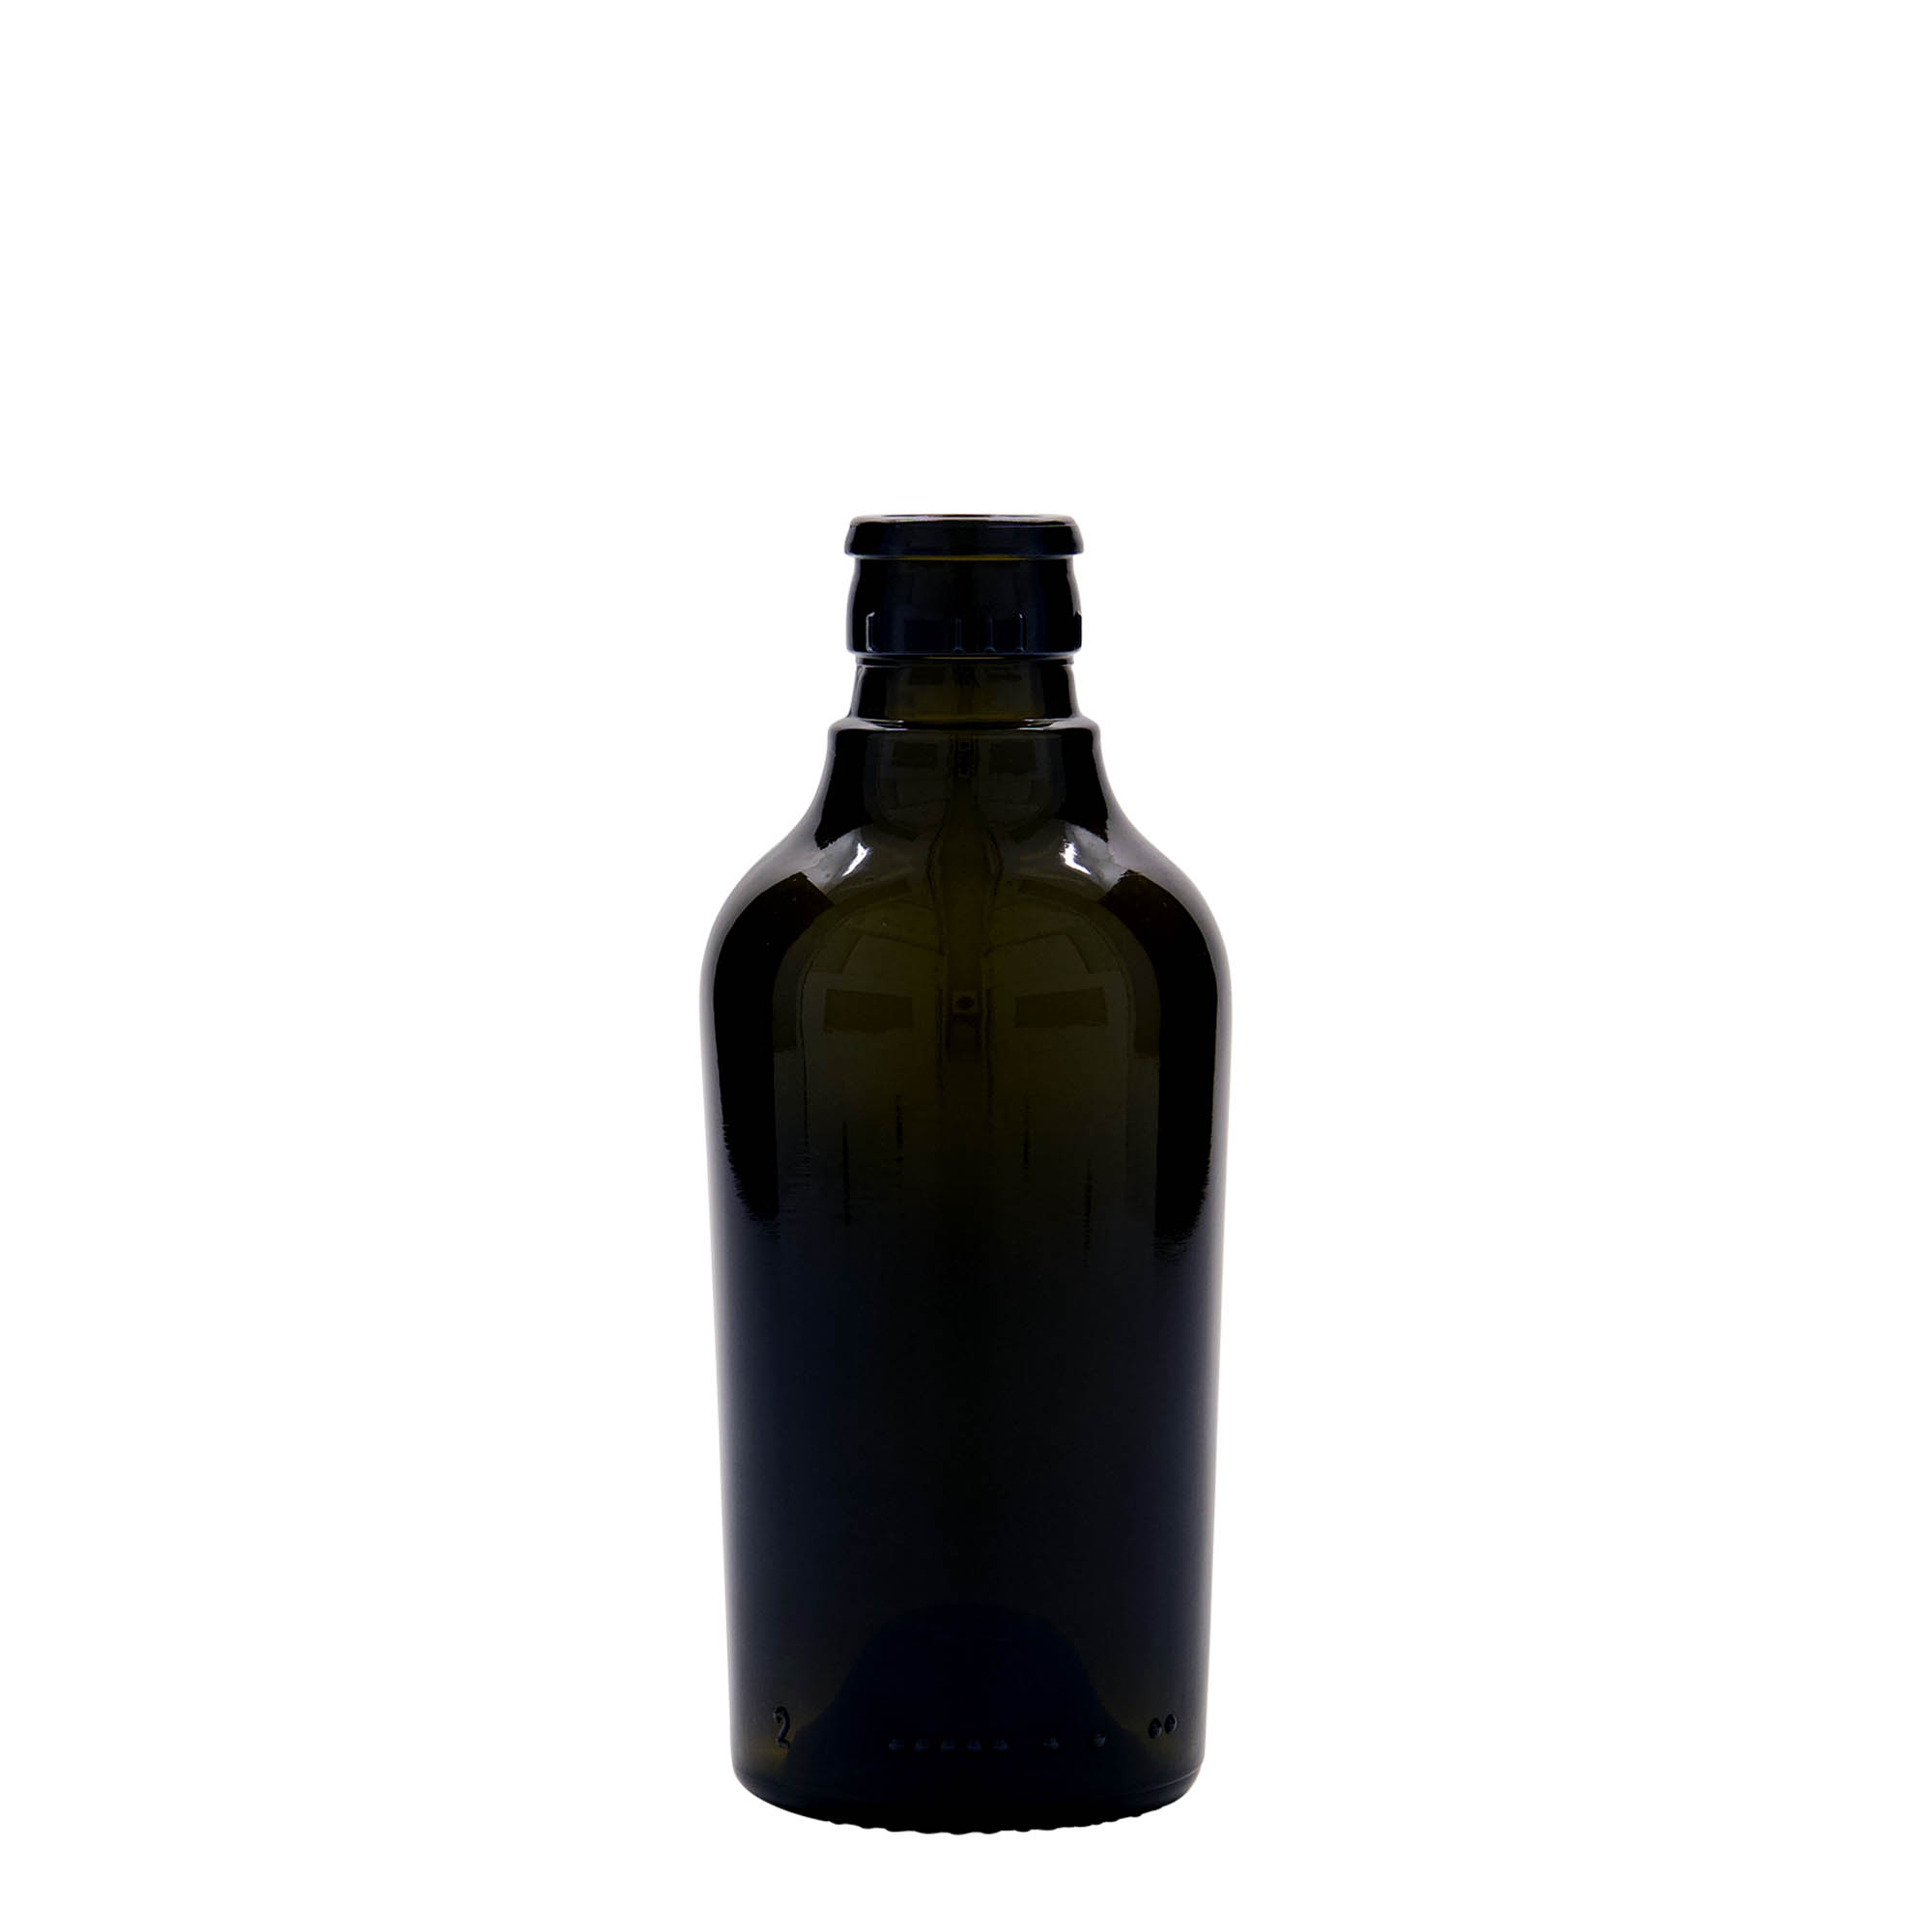 250 ml eddike-/olieflaske 'Oleum', glas, antikgrøn, åbning: DOP